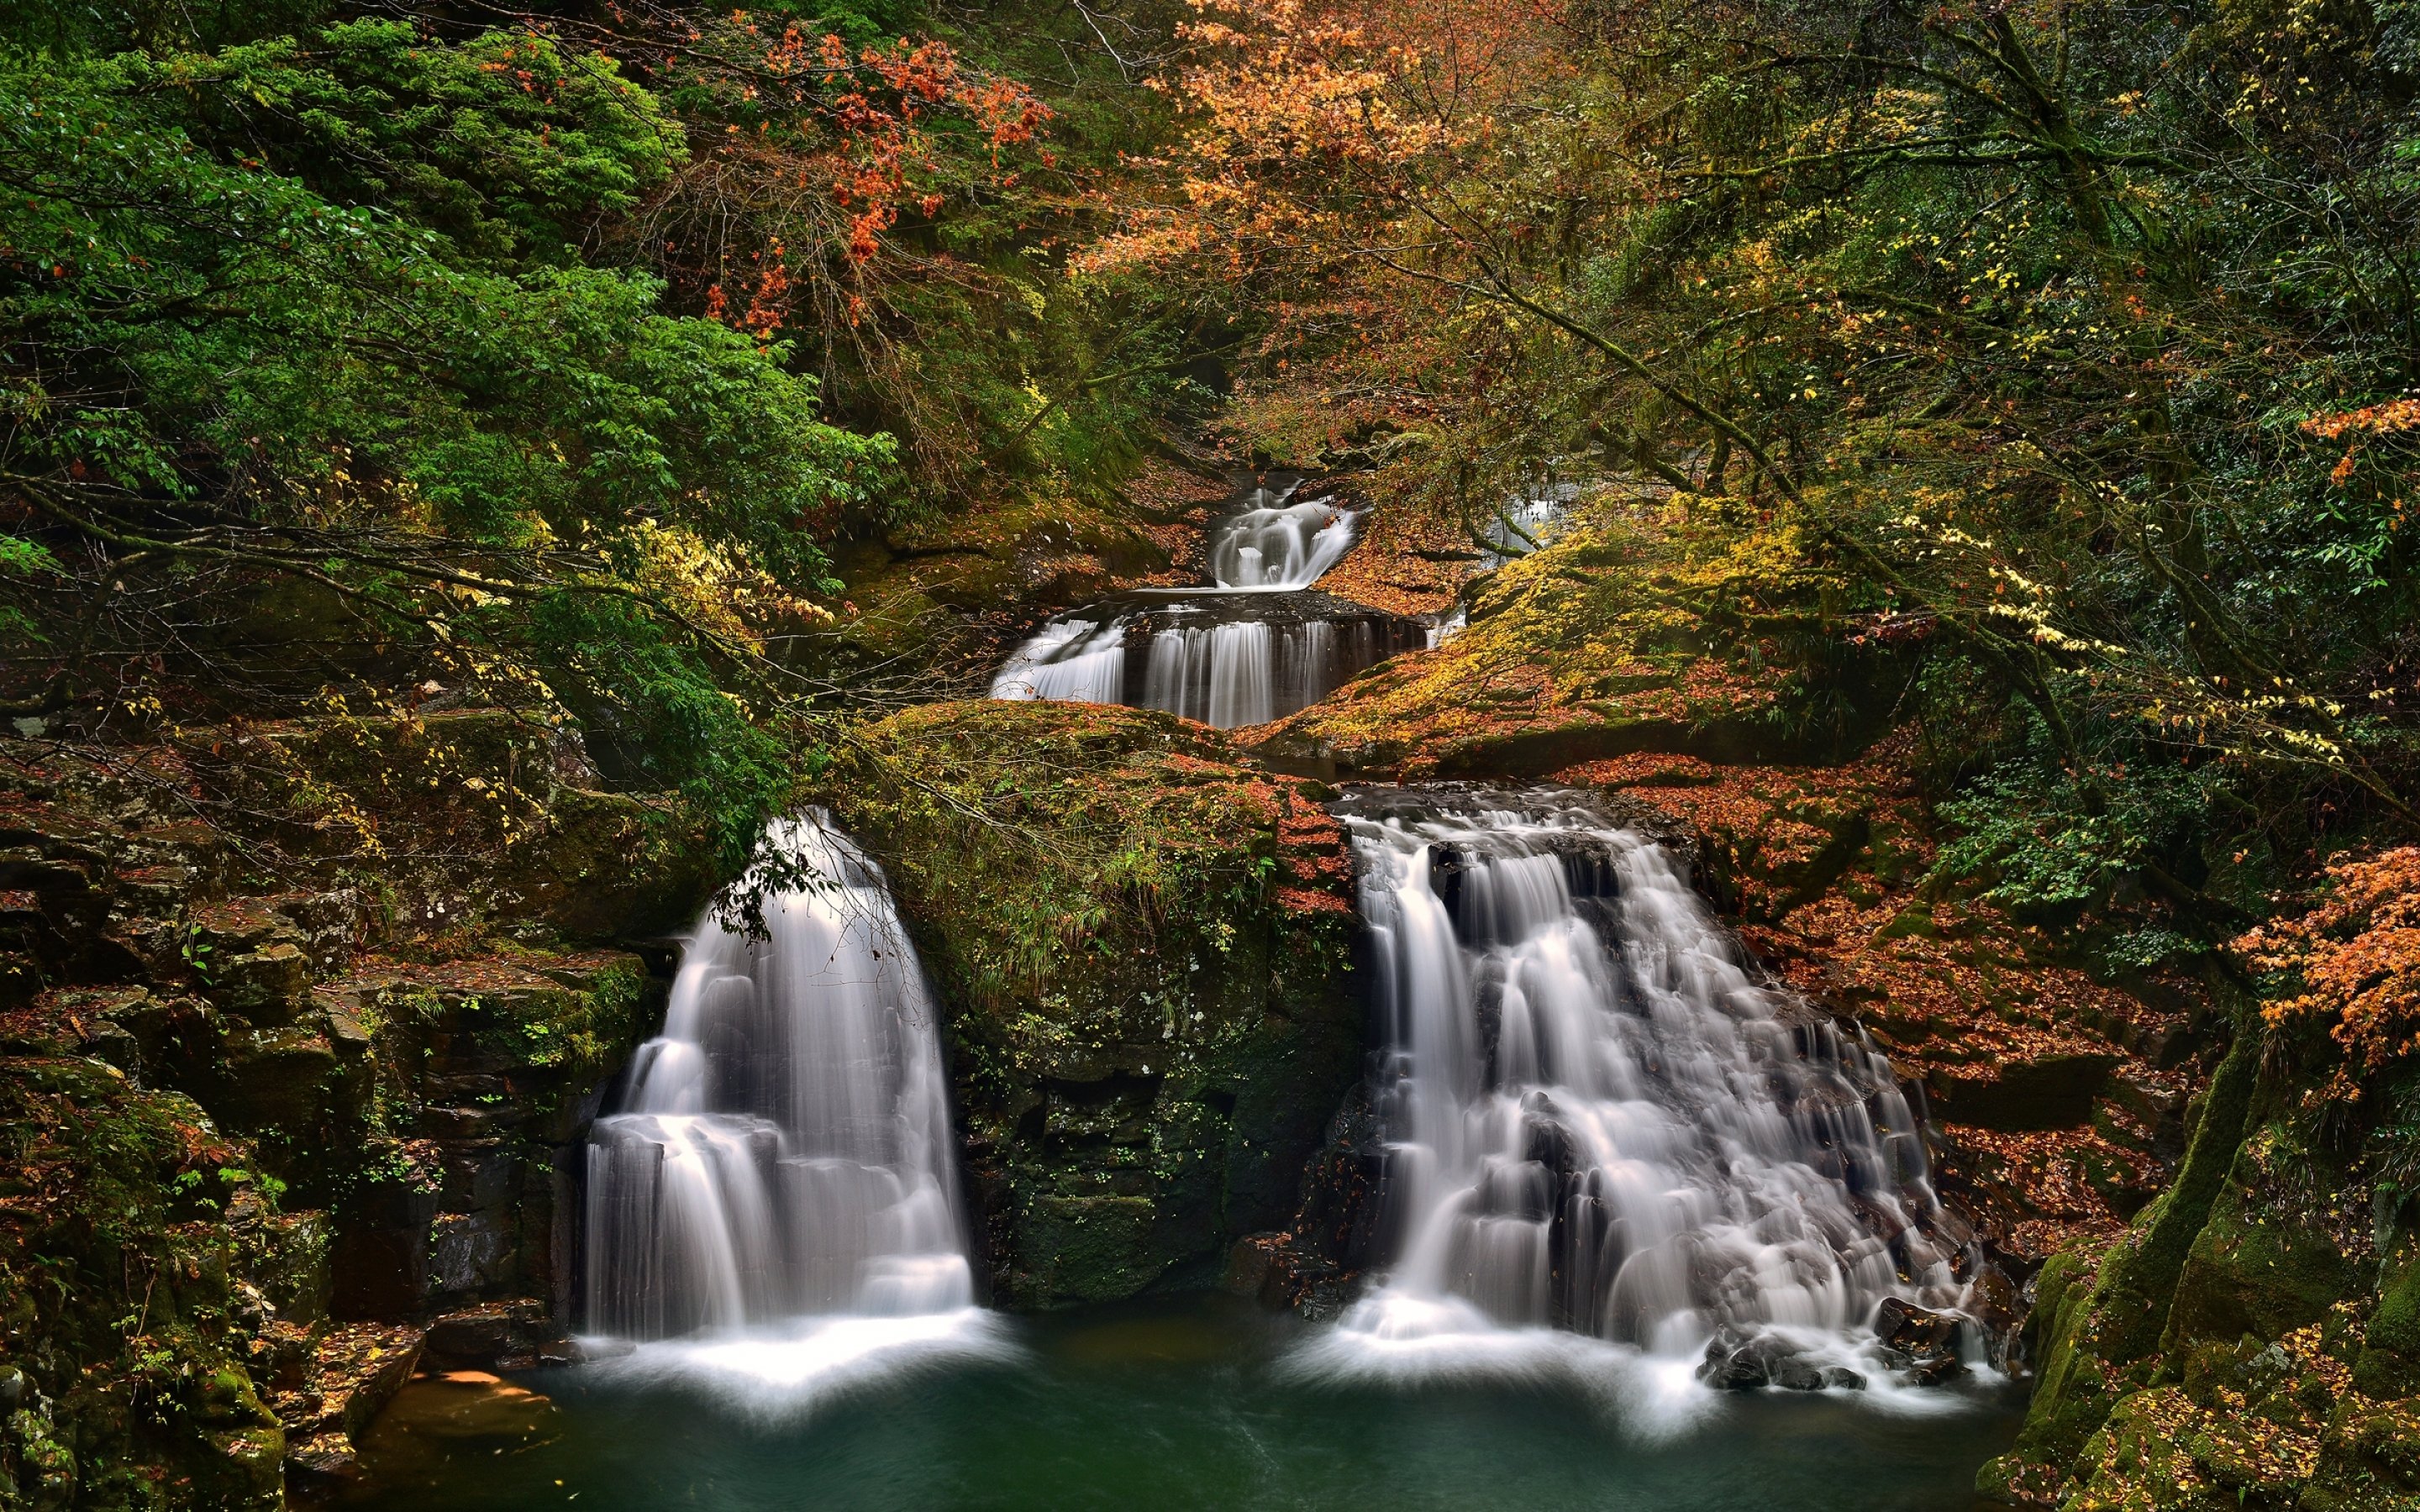 Waterfall River Landscape Nature Waterfalls Autumn Wallpapers Hd